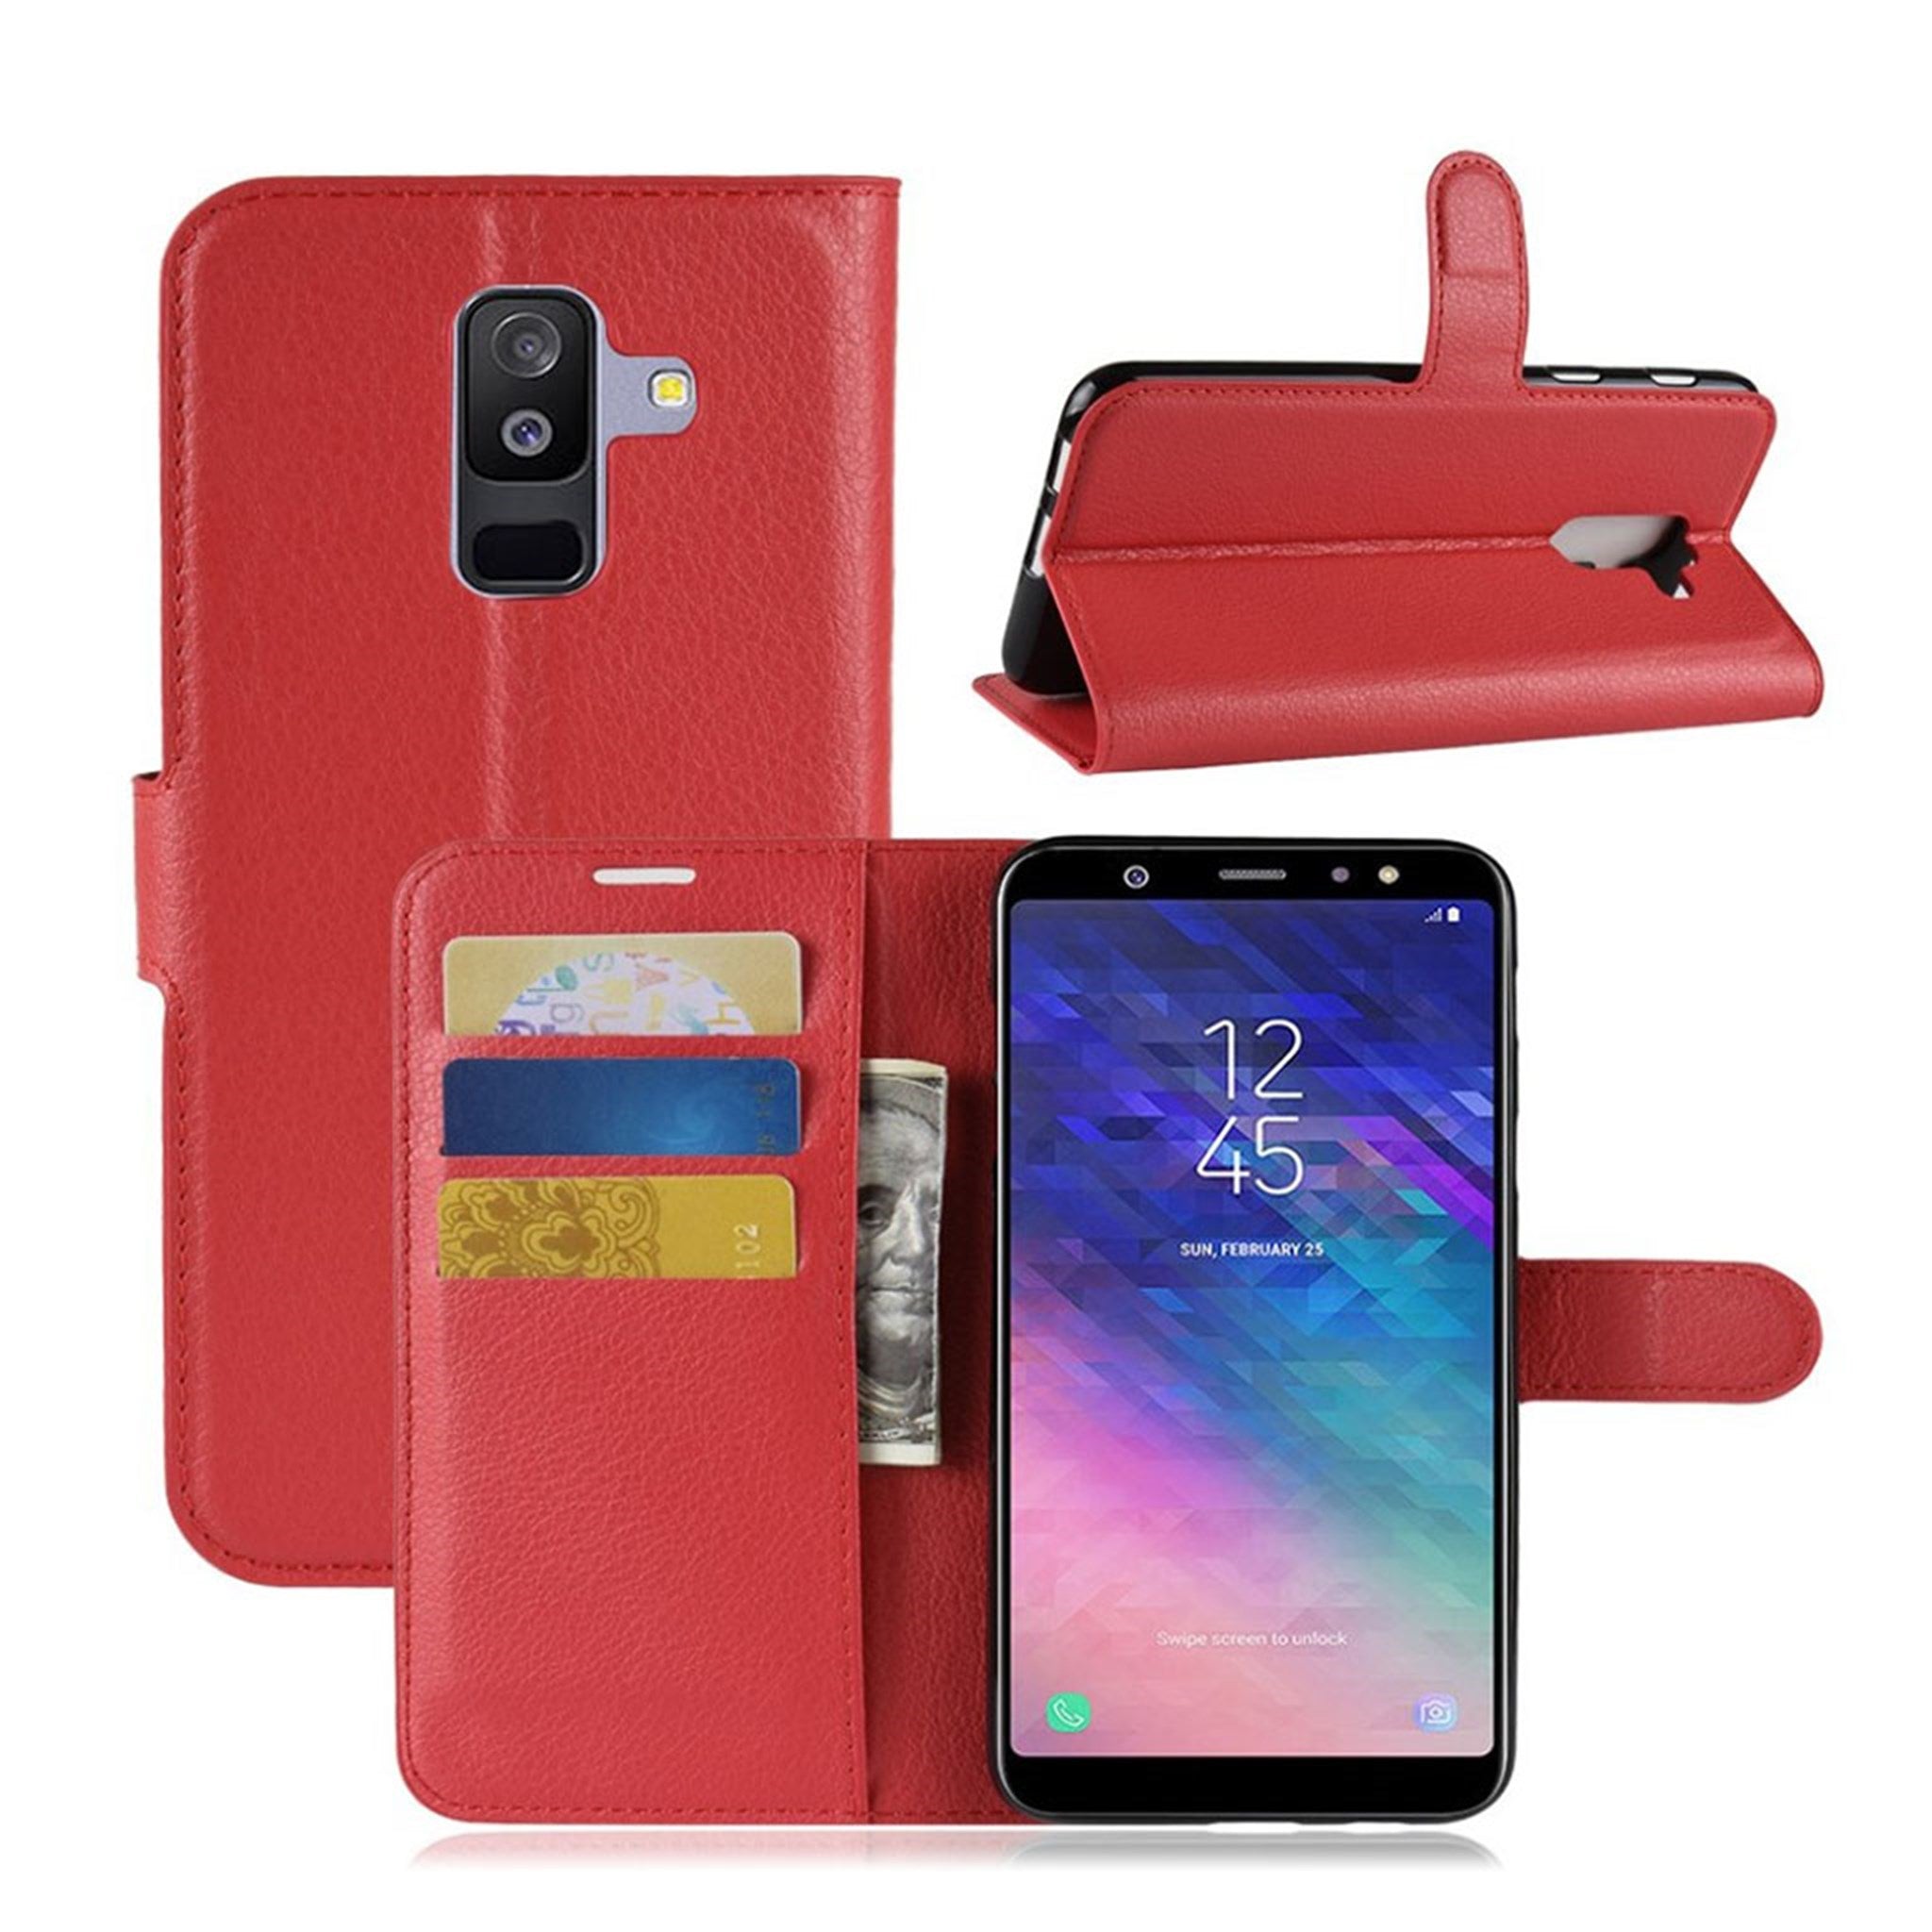 Samsung Galaxy A6 Plus litchi skin leather case - Red